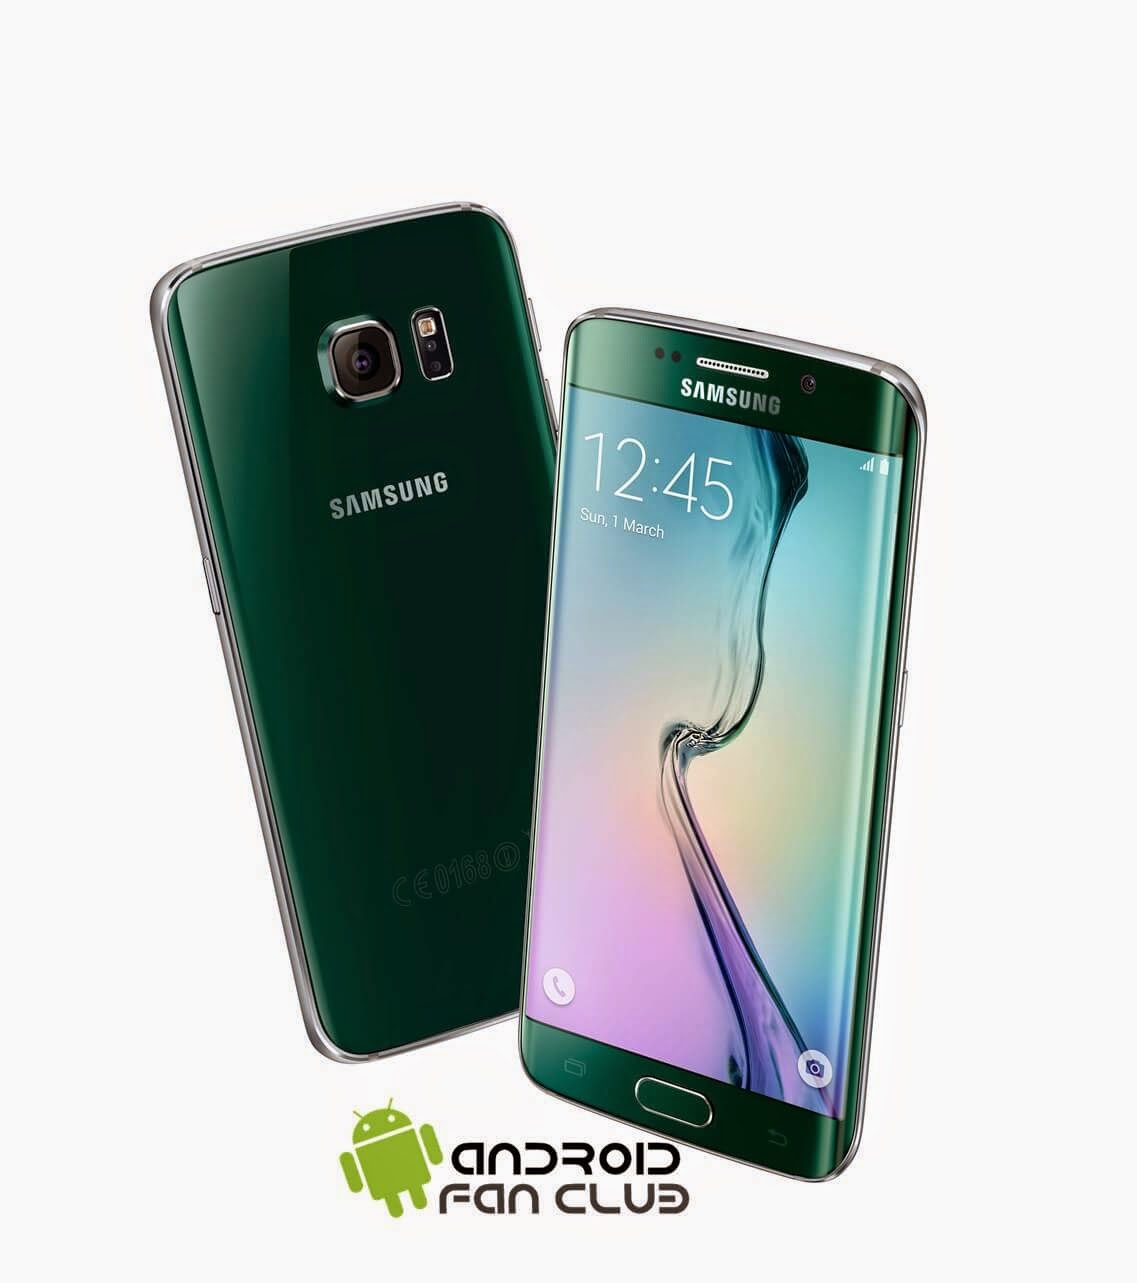 Samsung Galaxy S 6 Versus Samsung Galaxy S 6 Edge - Features, Specs, Points